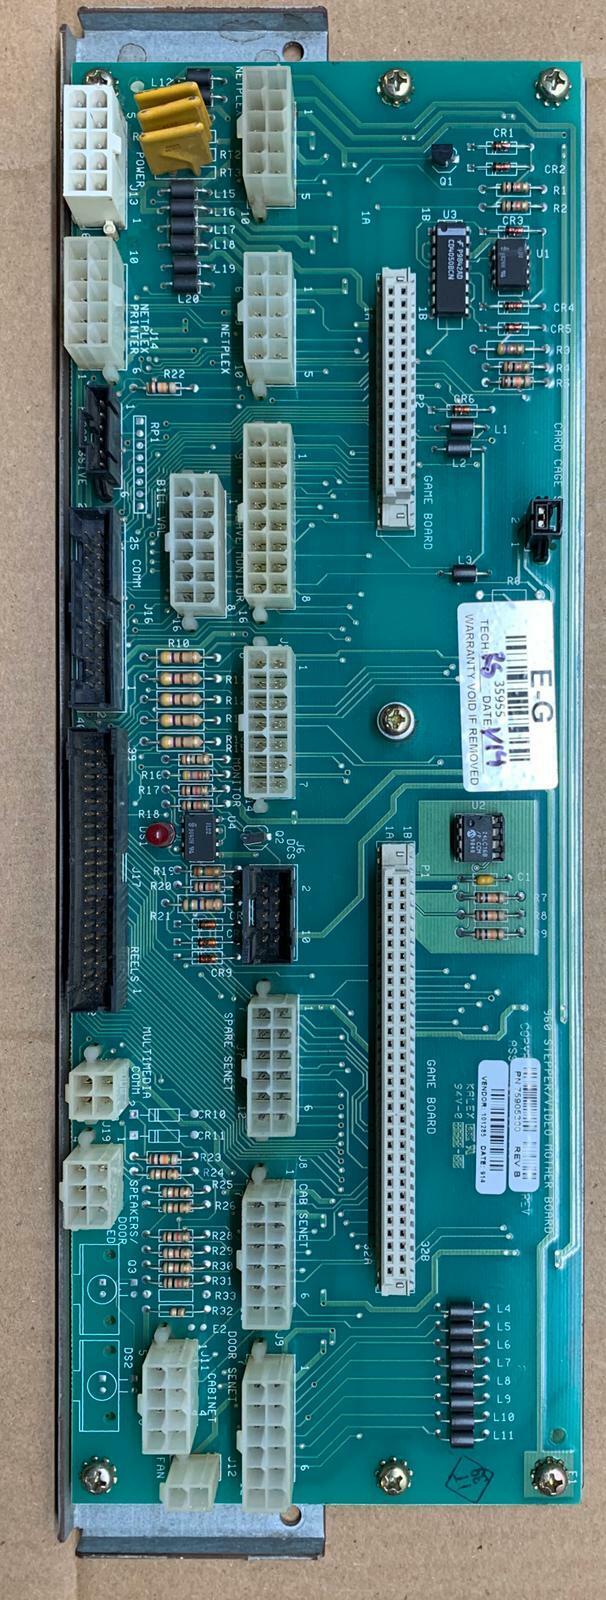 Igt 960 stepper/ video mother board part# PN 75905300 REV B